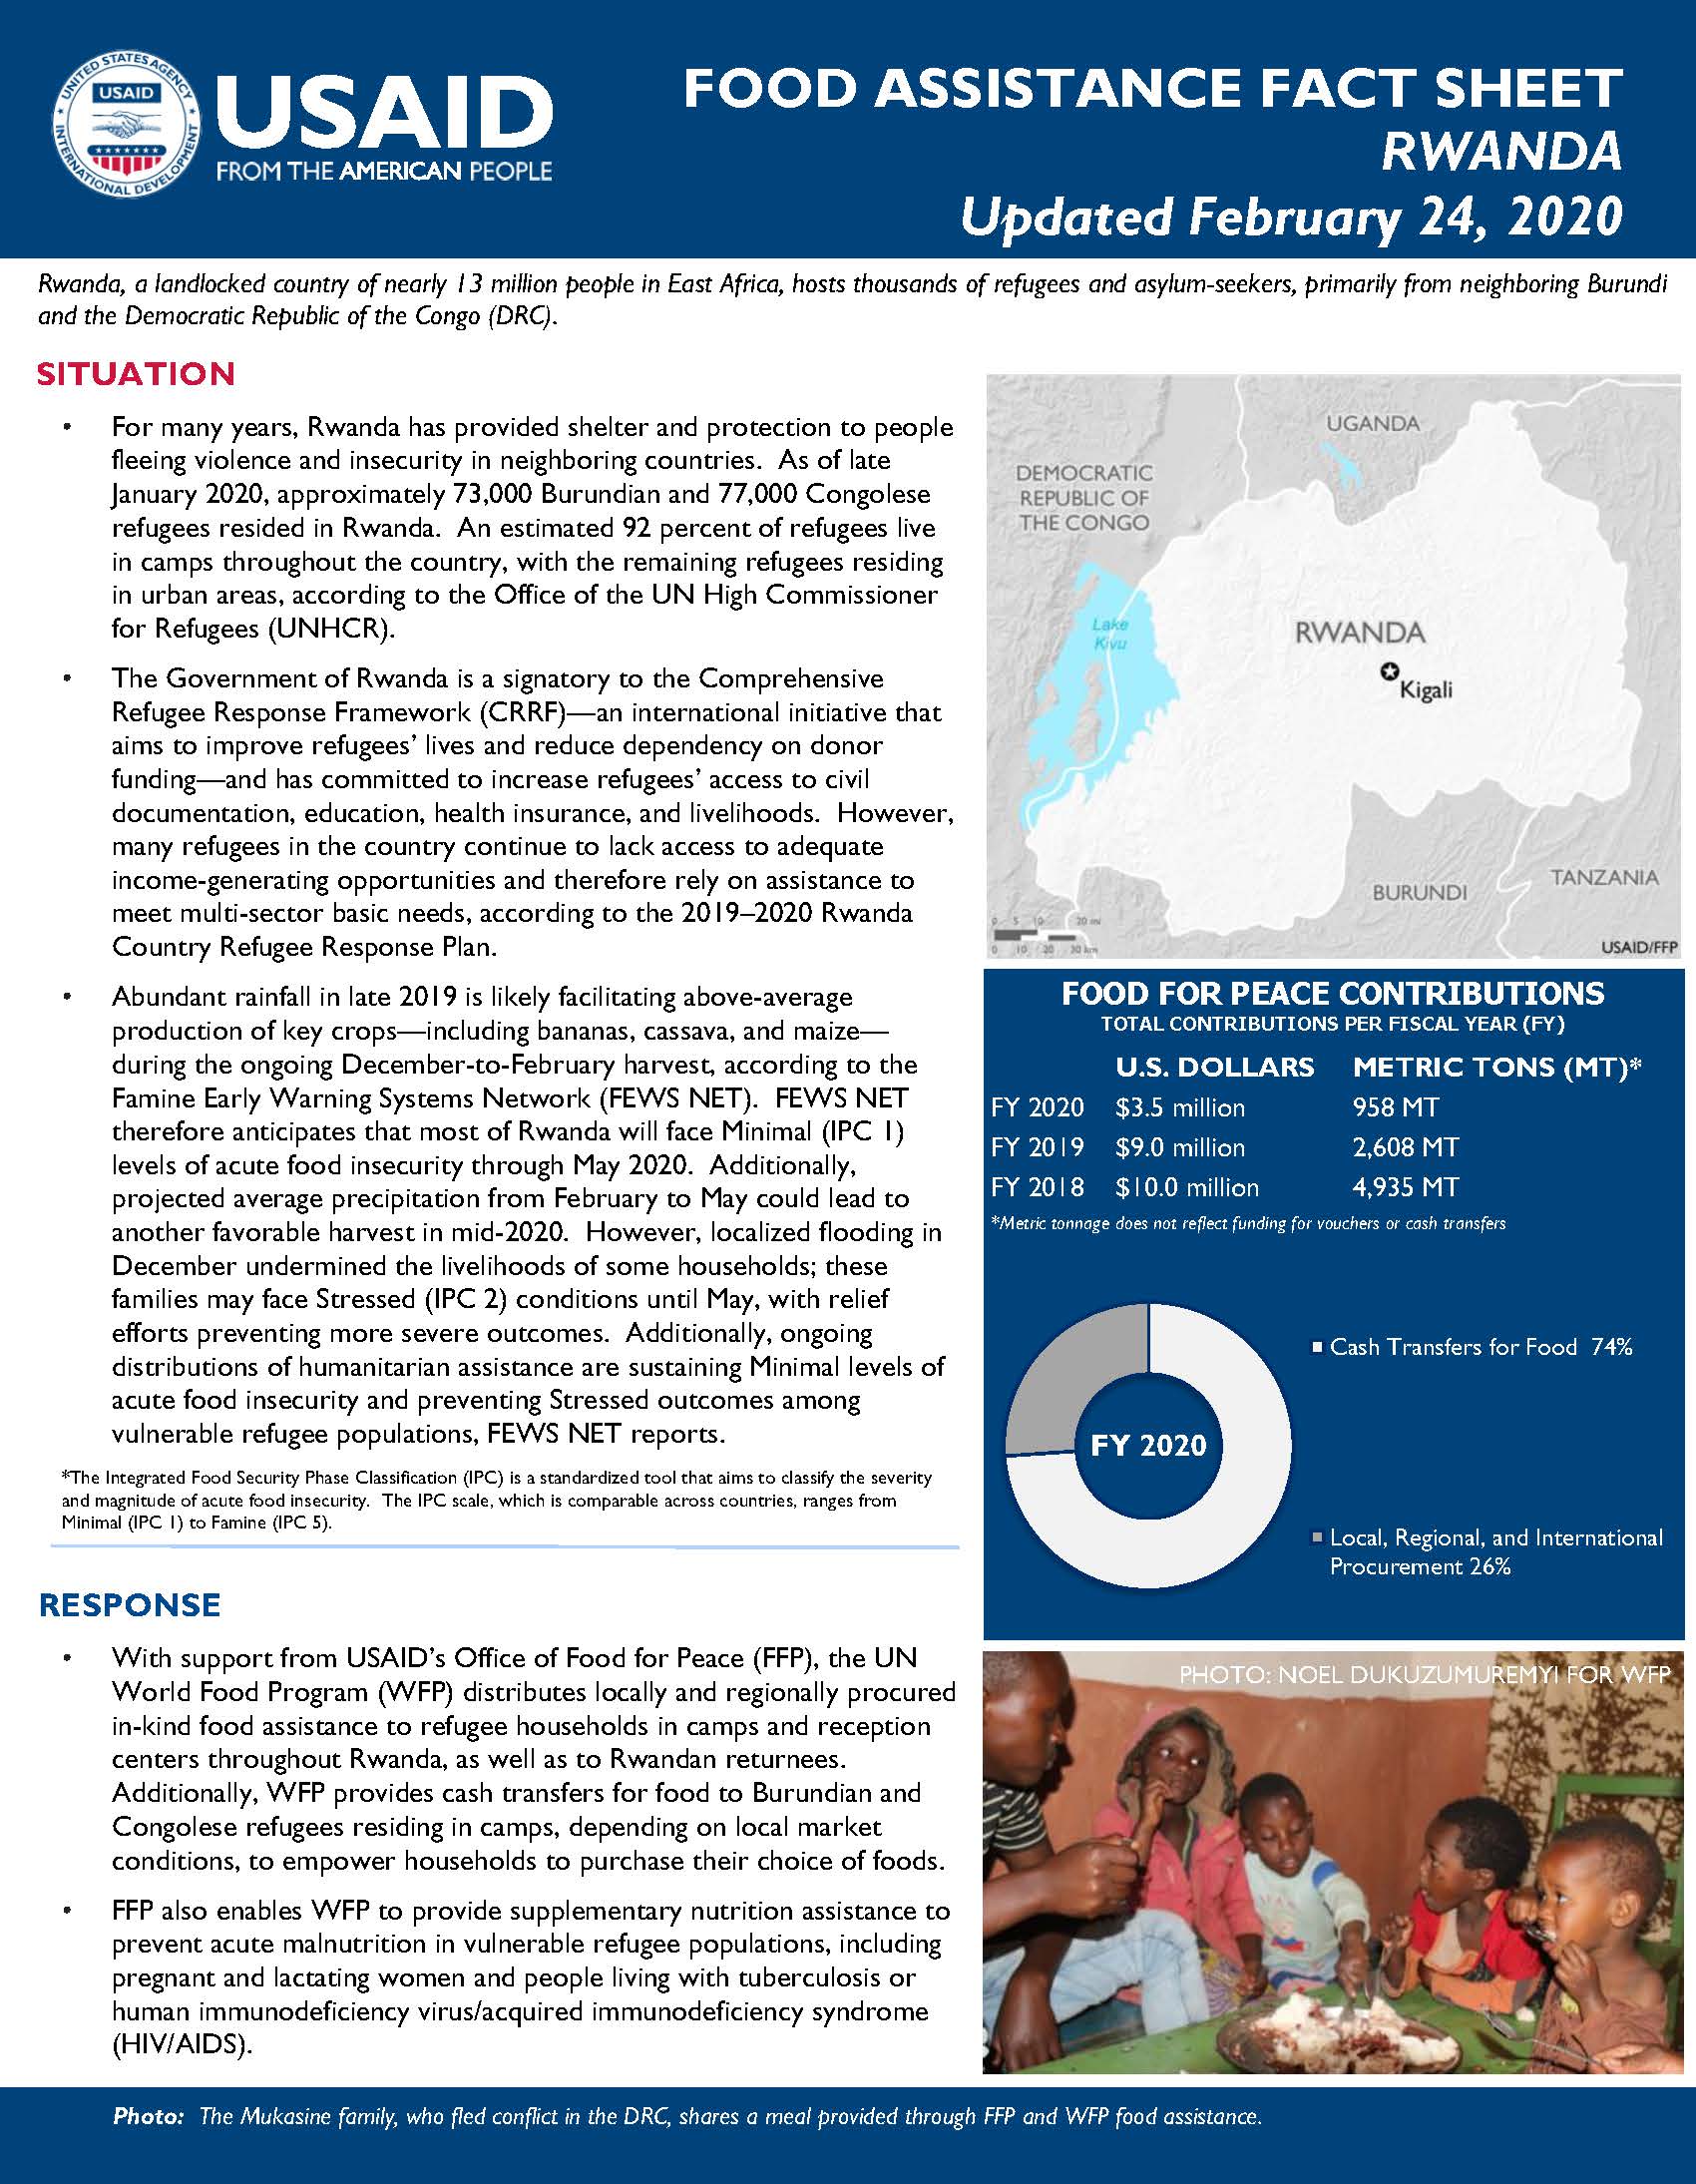 Food Assistance Fact Sheet - Rwanda